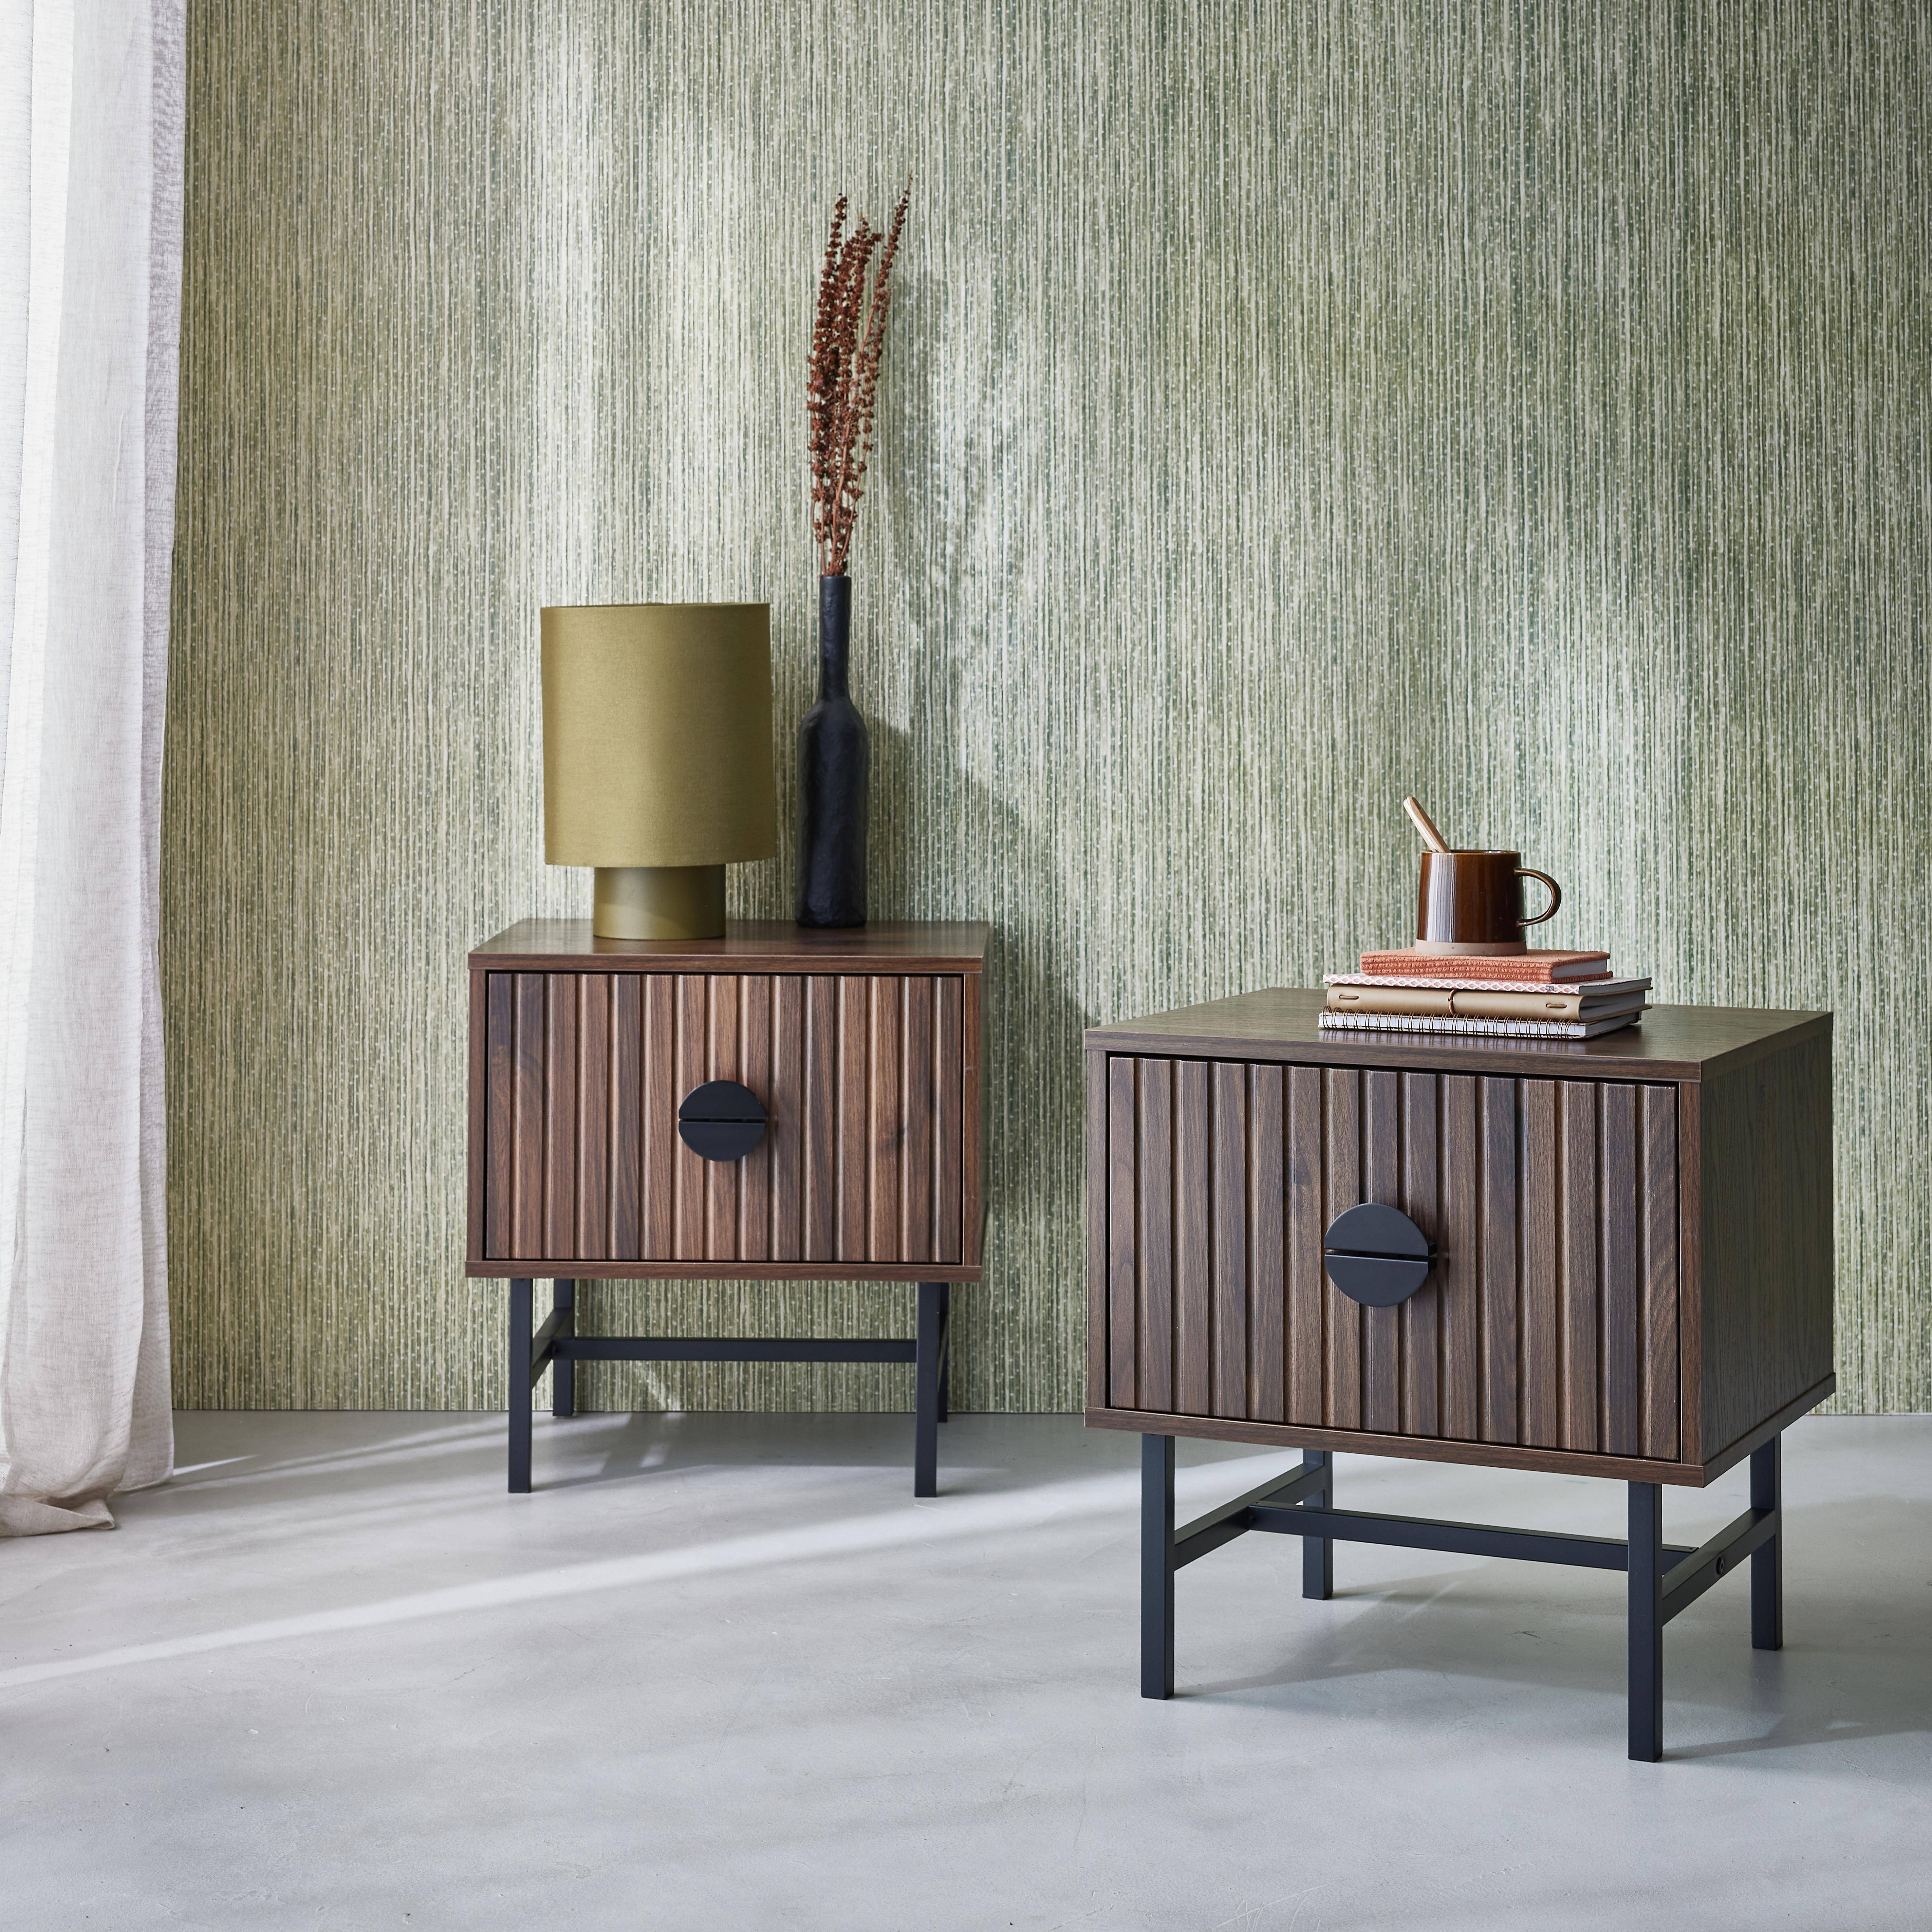 Set of 2 dark wood effect bedside tables, one drawer, L 48 x W 39 x H 50cm,sweeek,Photo2